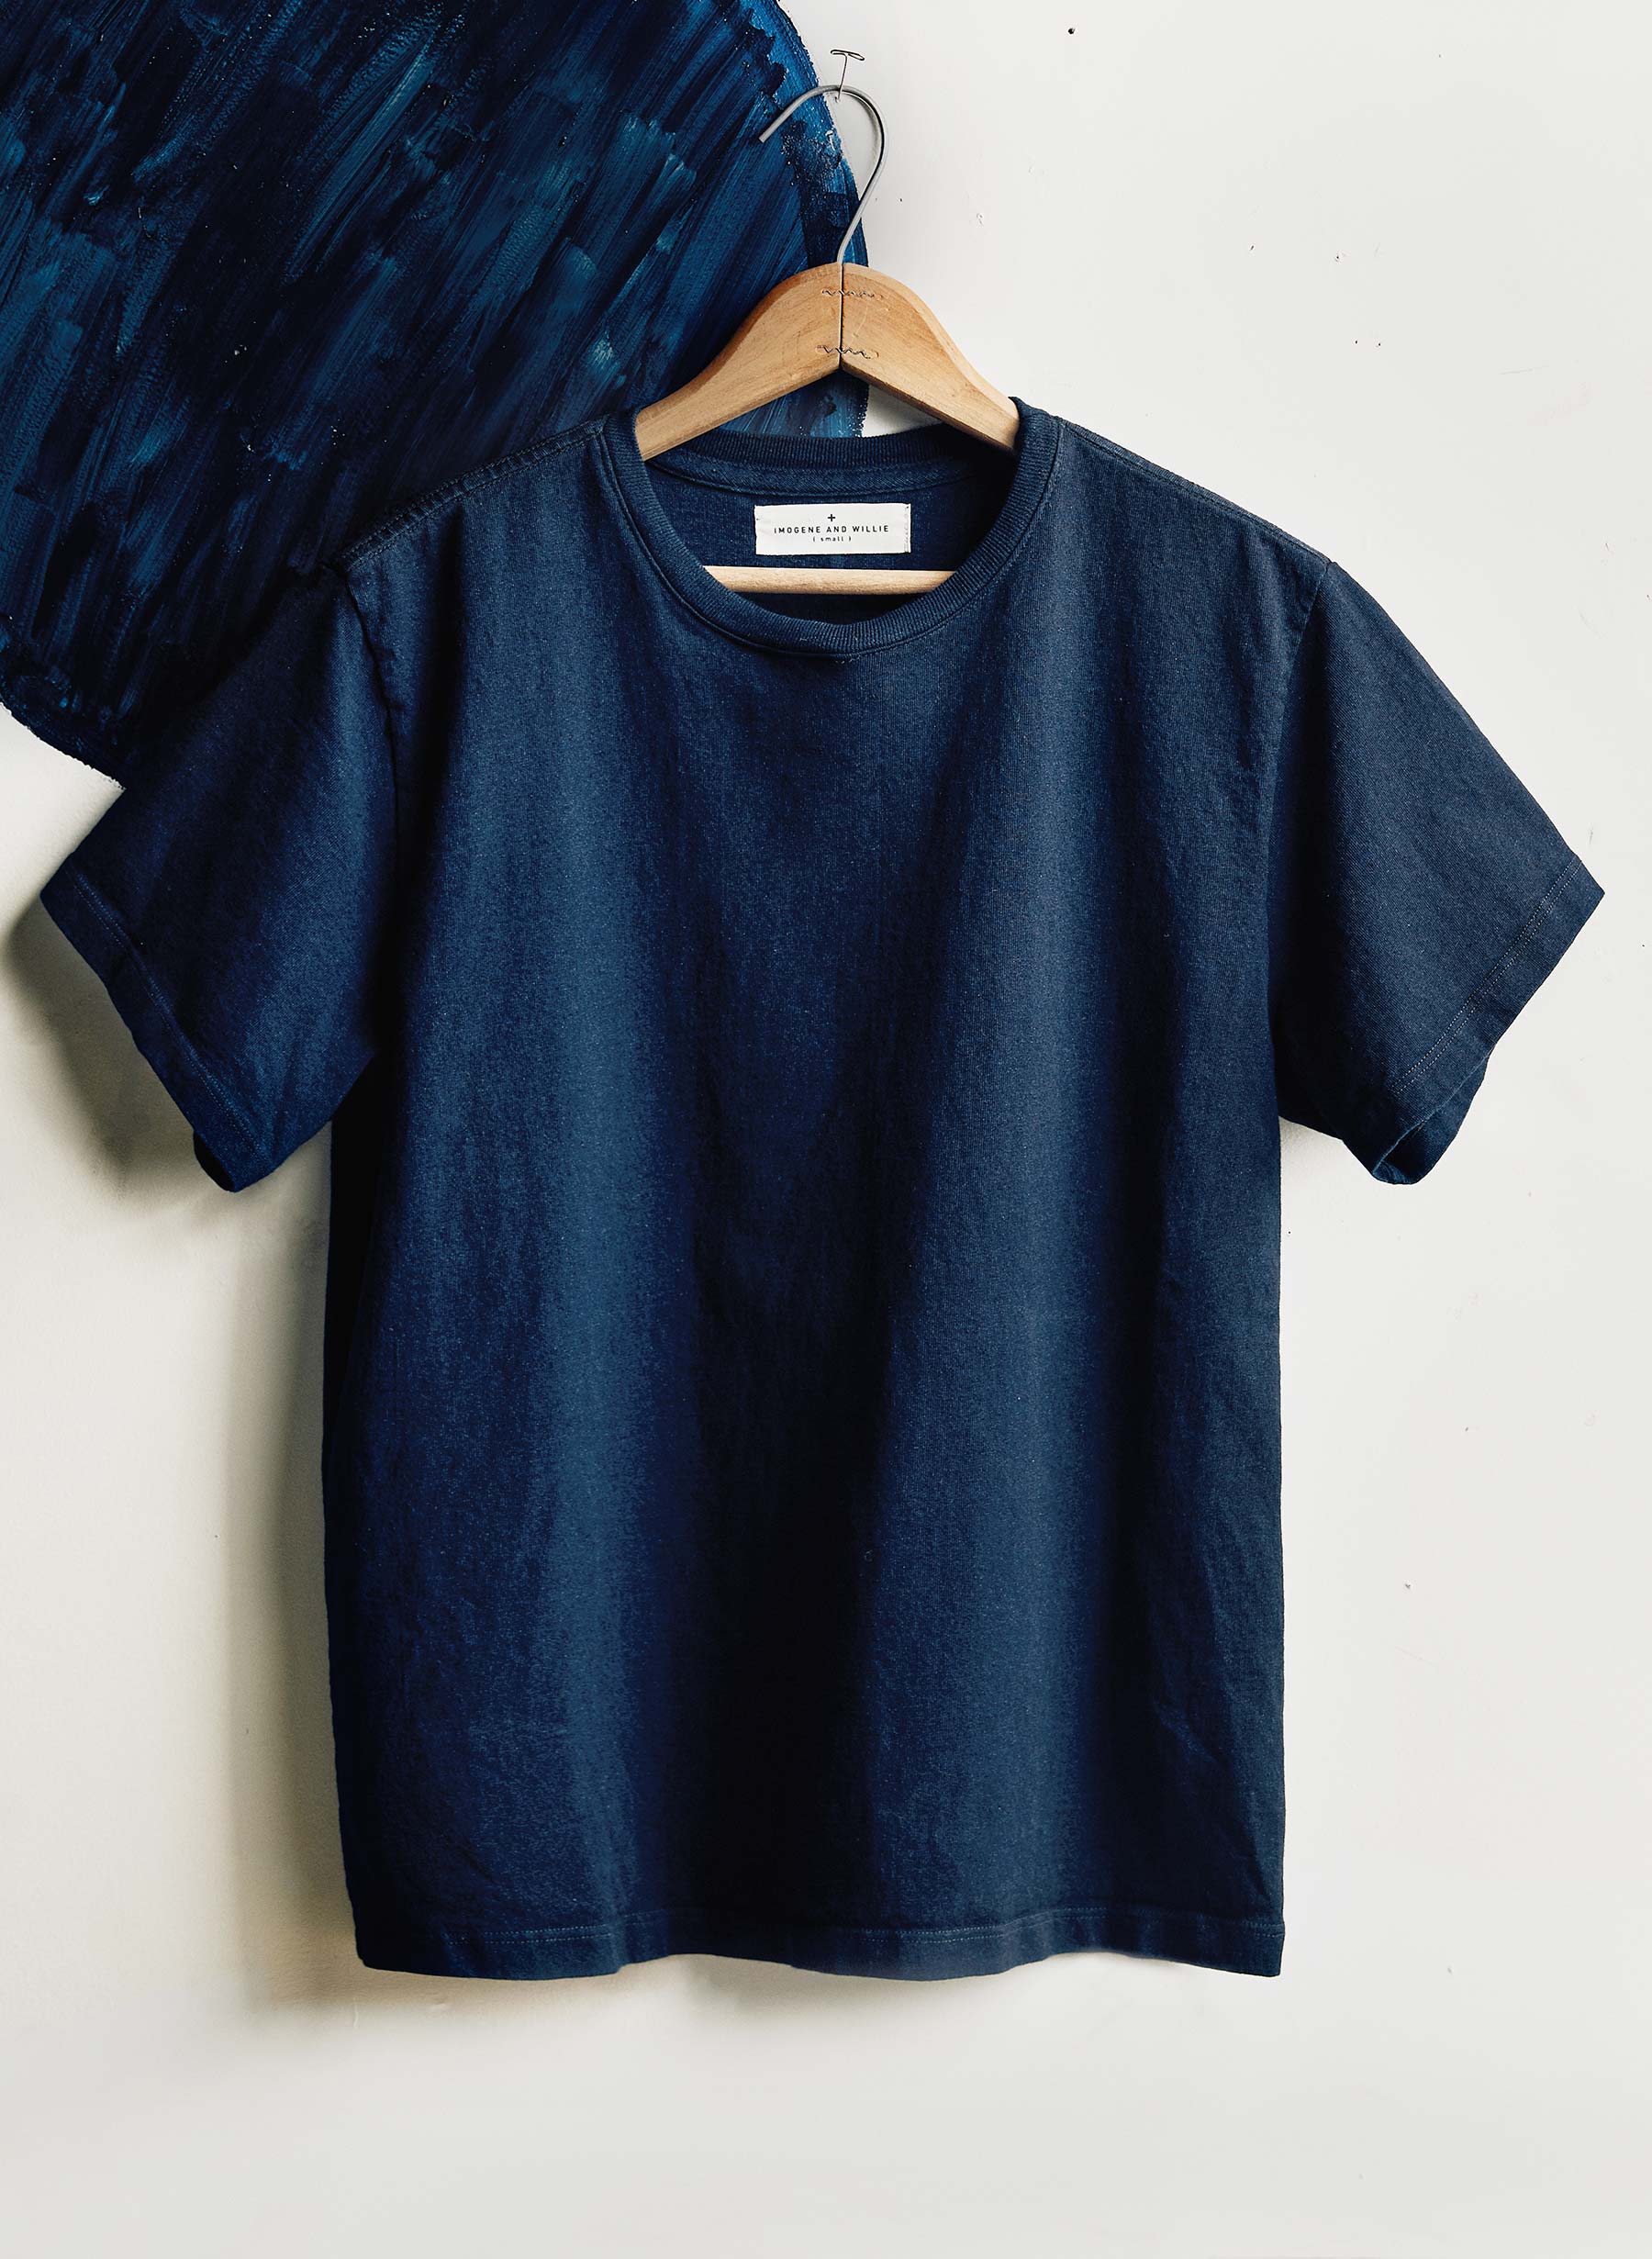 Outerwear, Azure, Neck, Sleeve, T-shirt, Grey, Collar, Electric blue, Pattern, Magenta